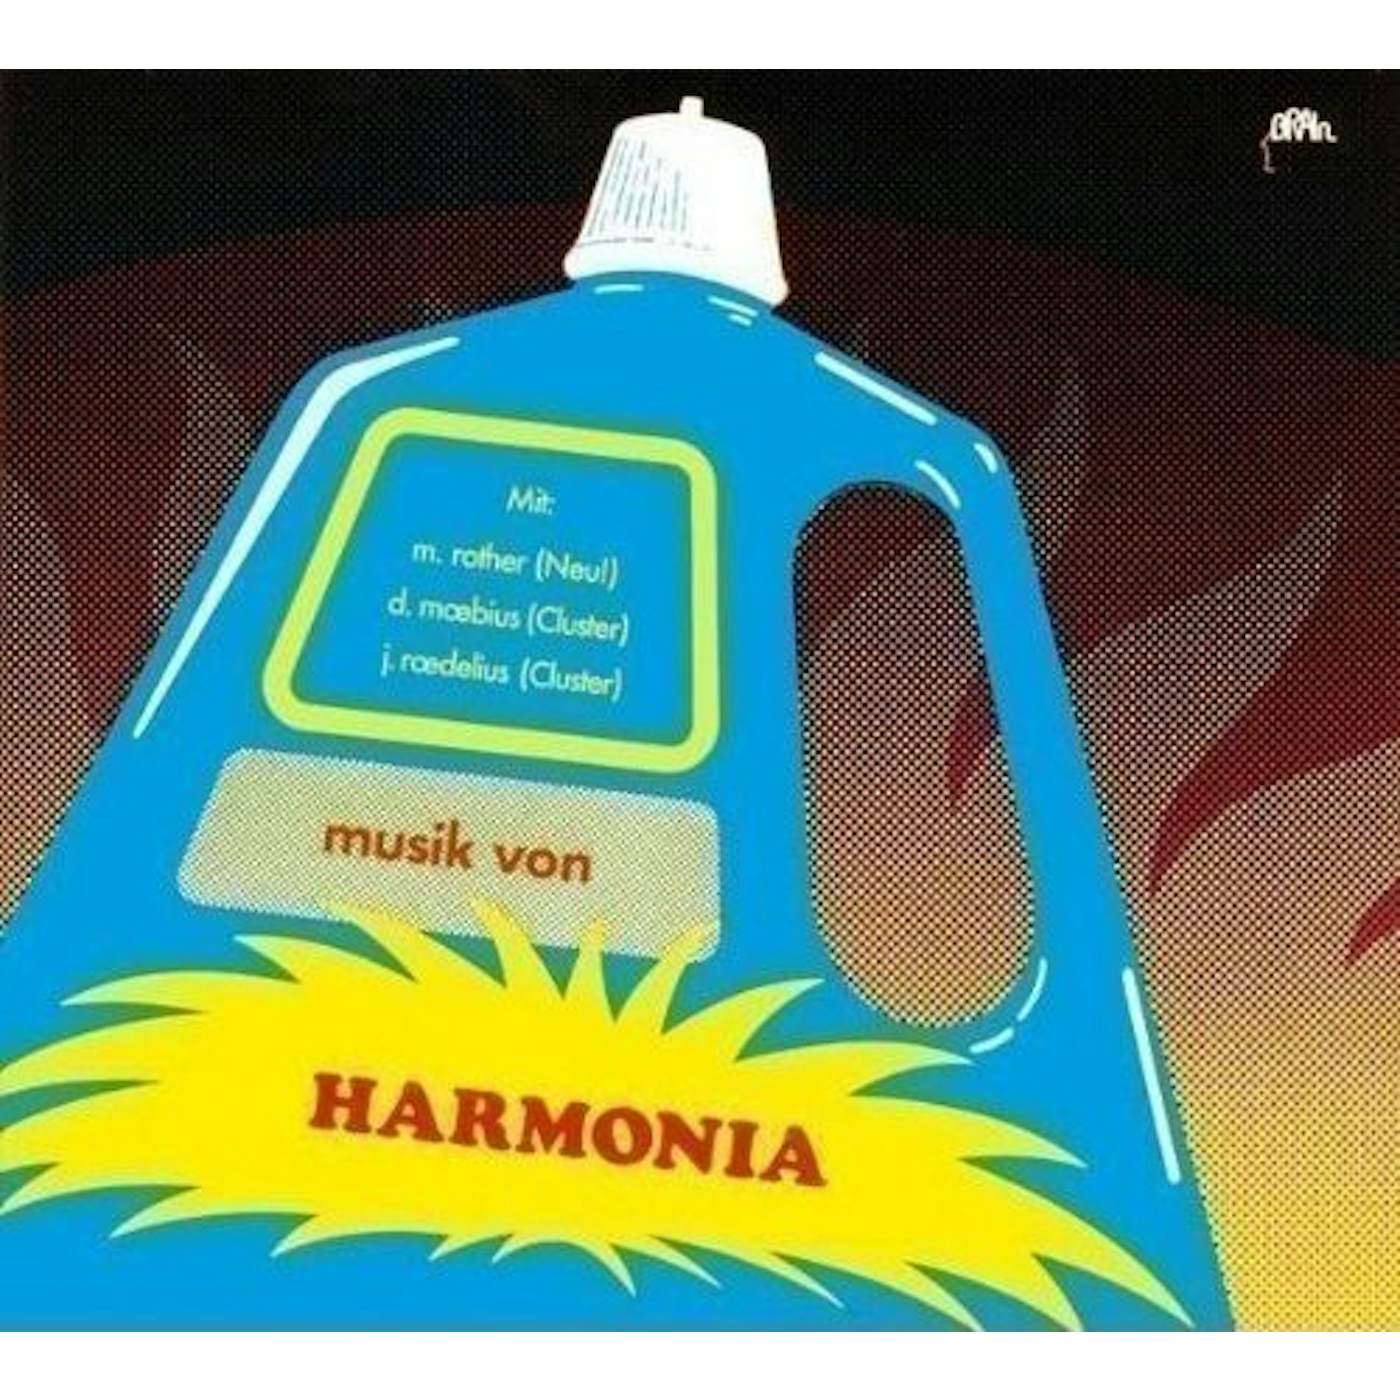 Musik von Harmonia Vinyl Record